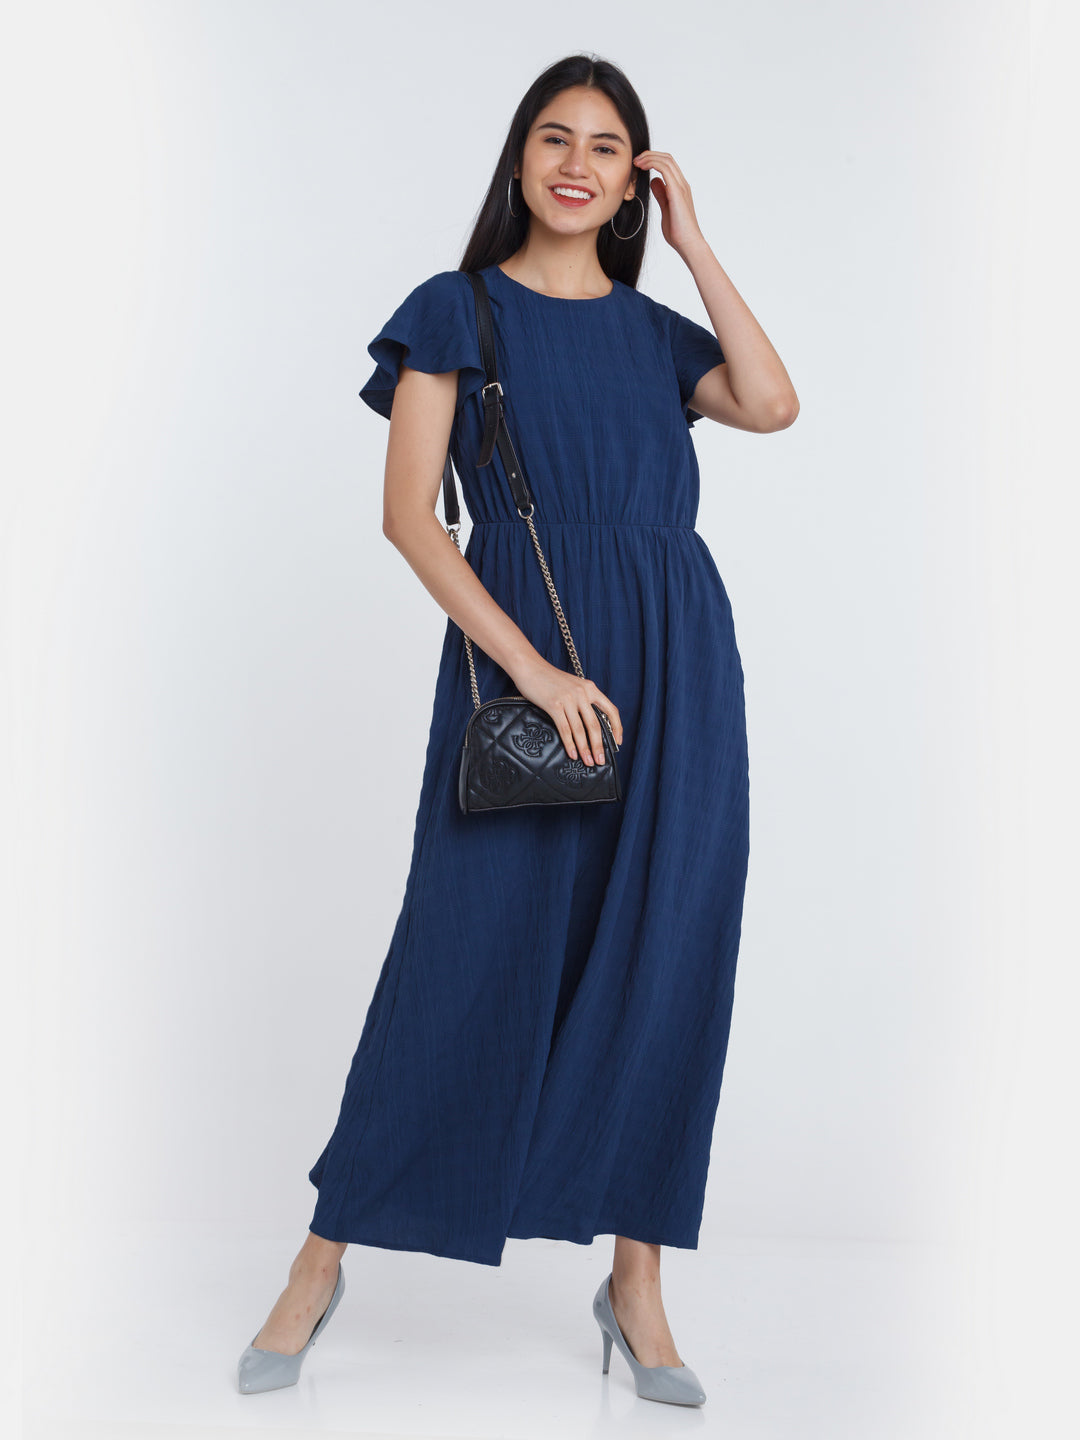 Denim blue maxi dress by Sugandh | The Secret Label